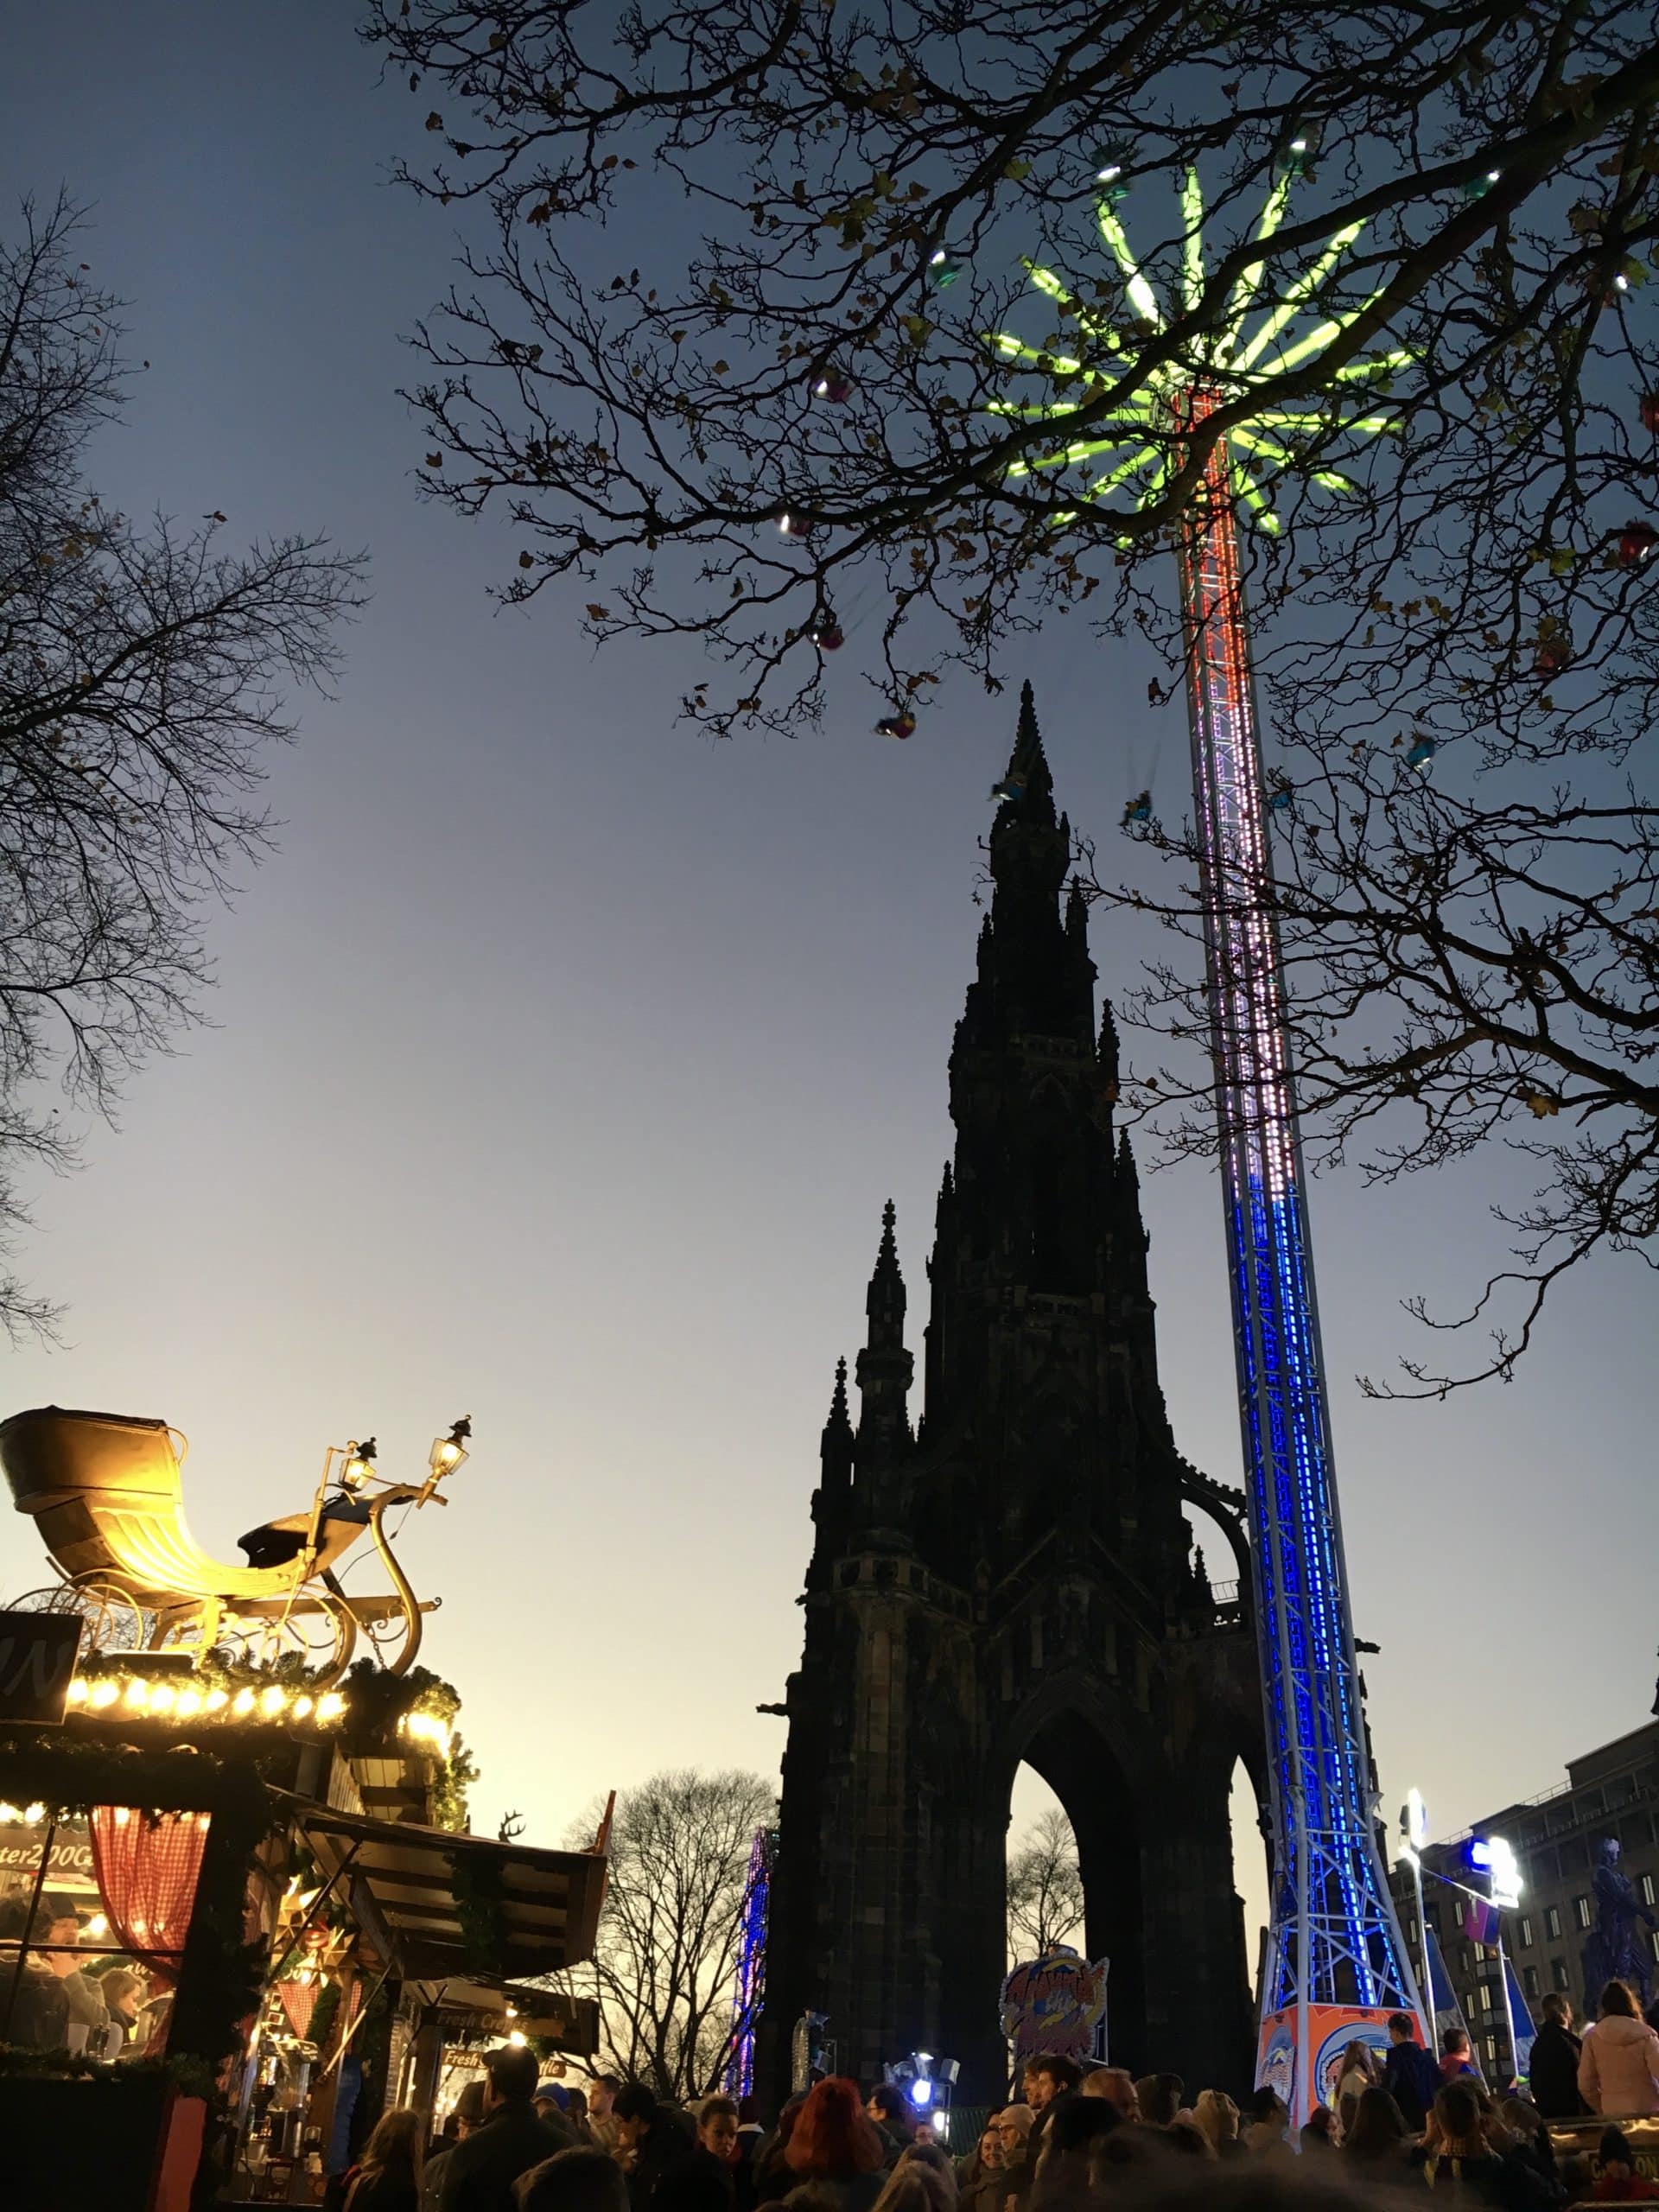 Magical Christmas time in Edinburgh